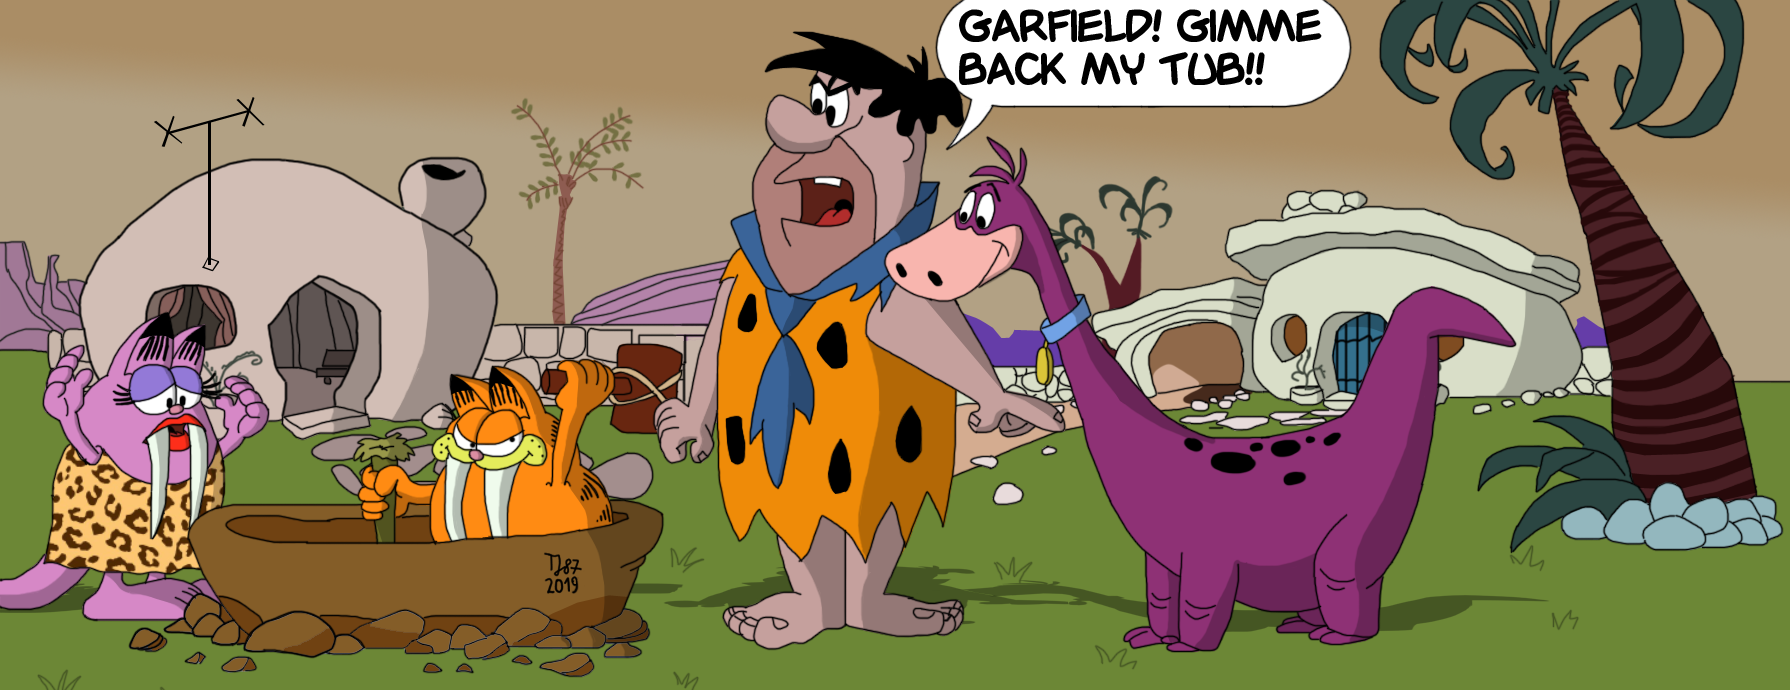 Garfield Meets the Flintstones by TeeJay87